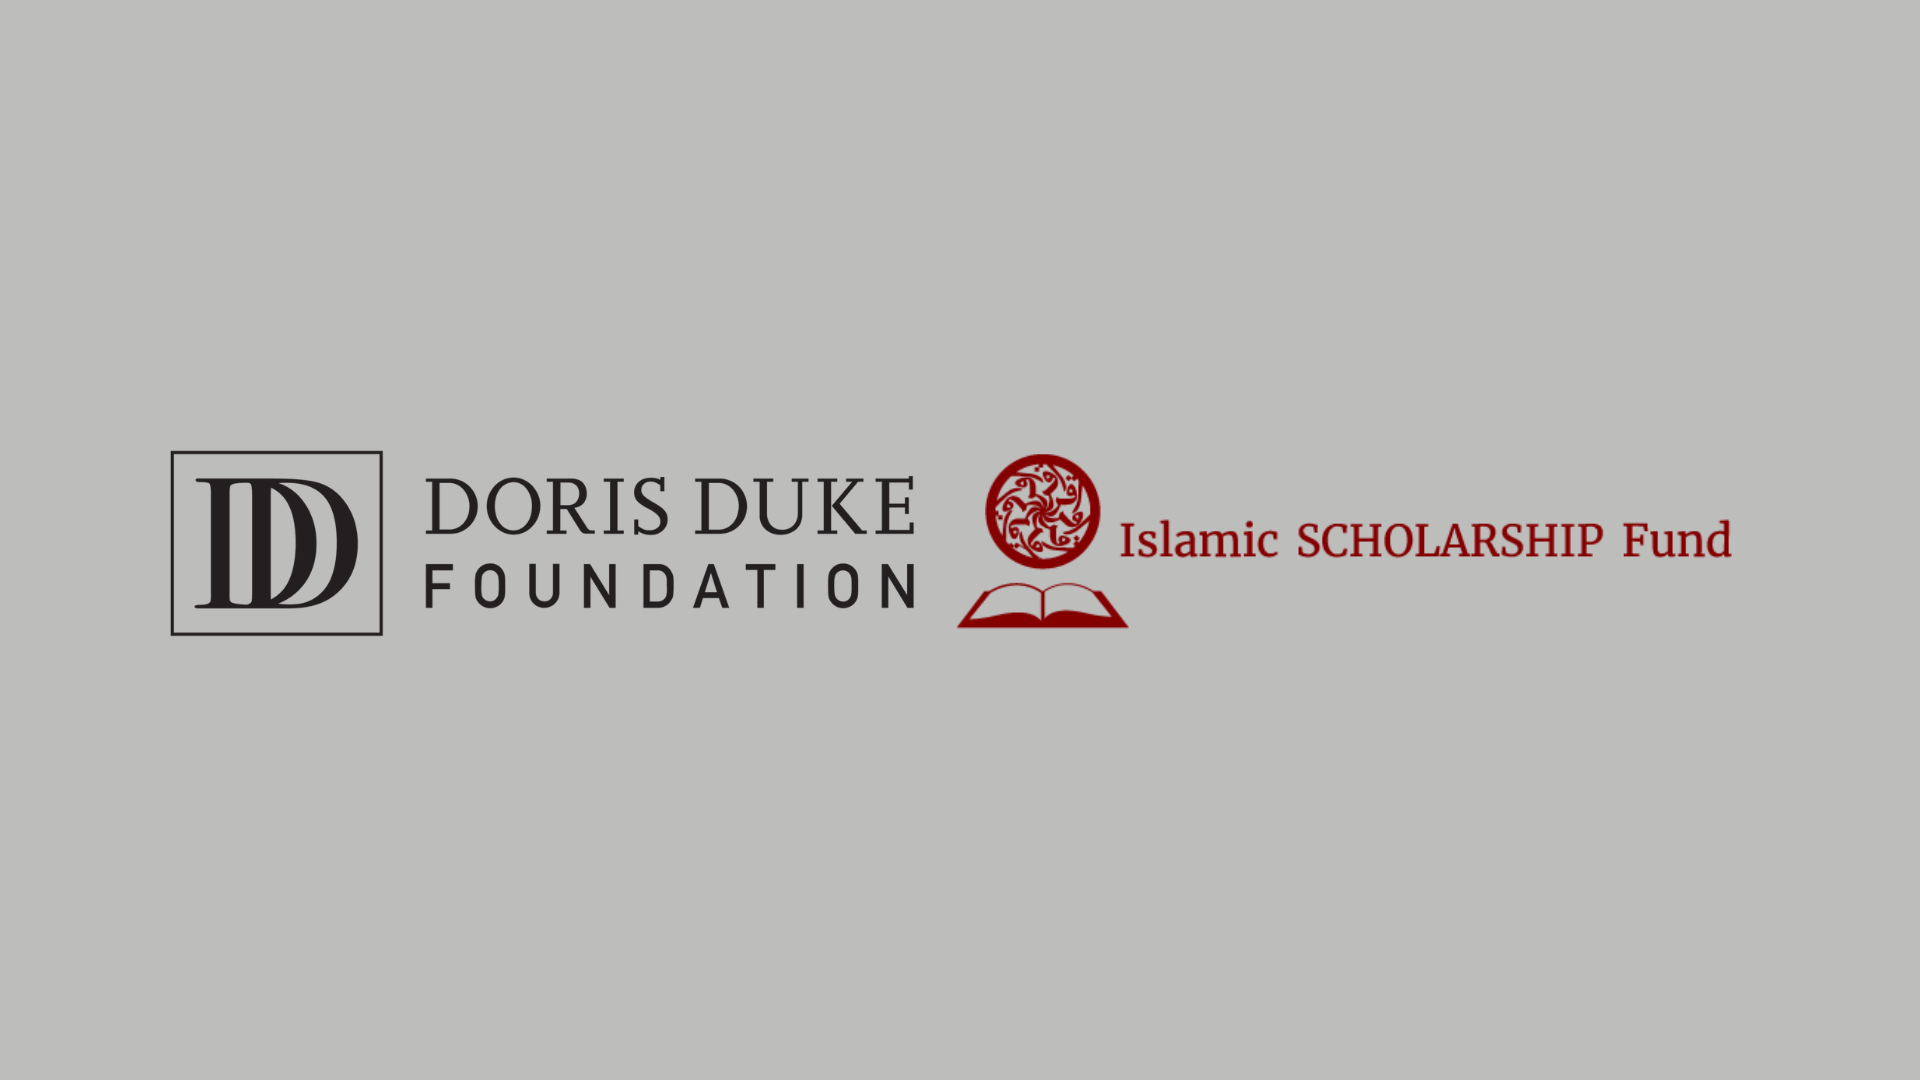 Logos of Doris Duke Foundation and Islamic Scholarship Fund